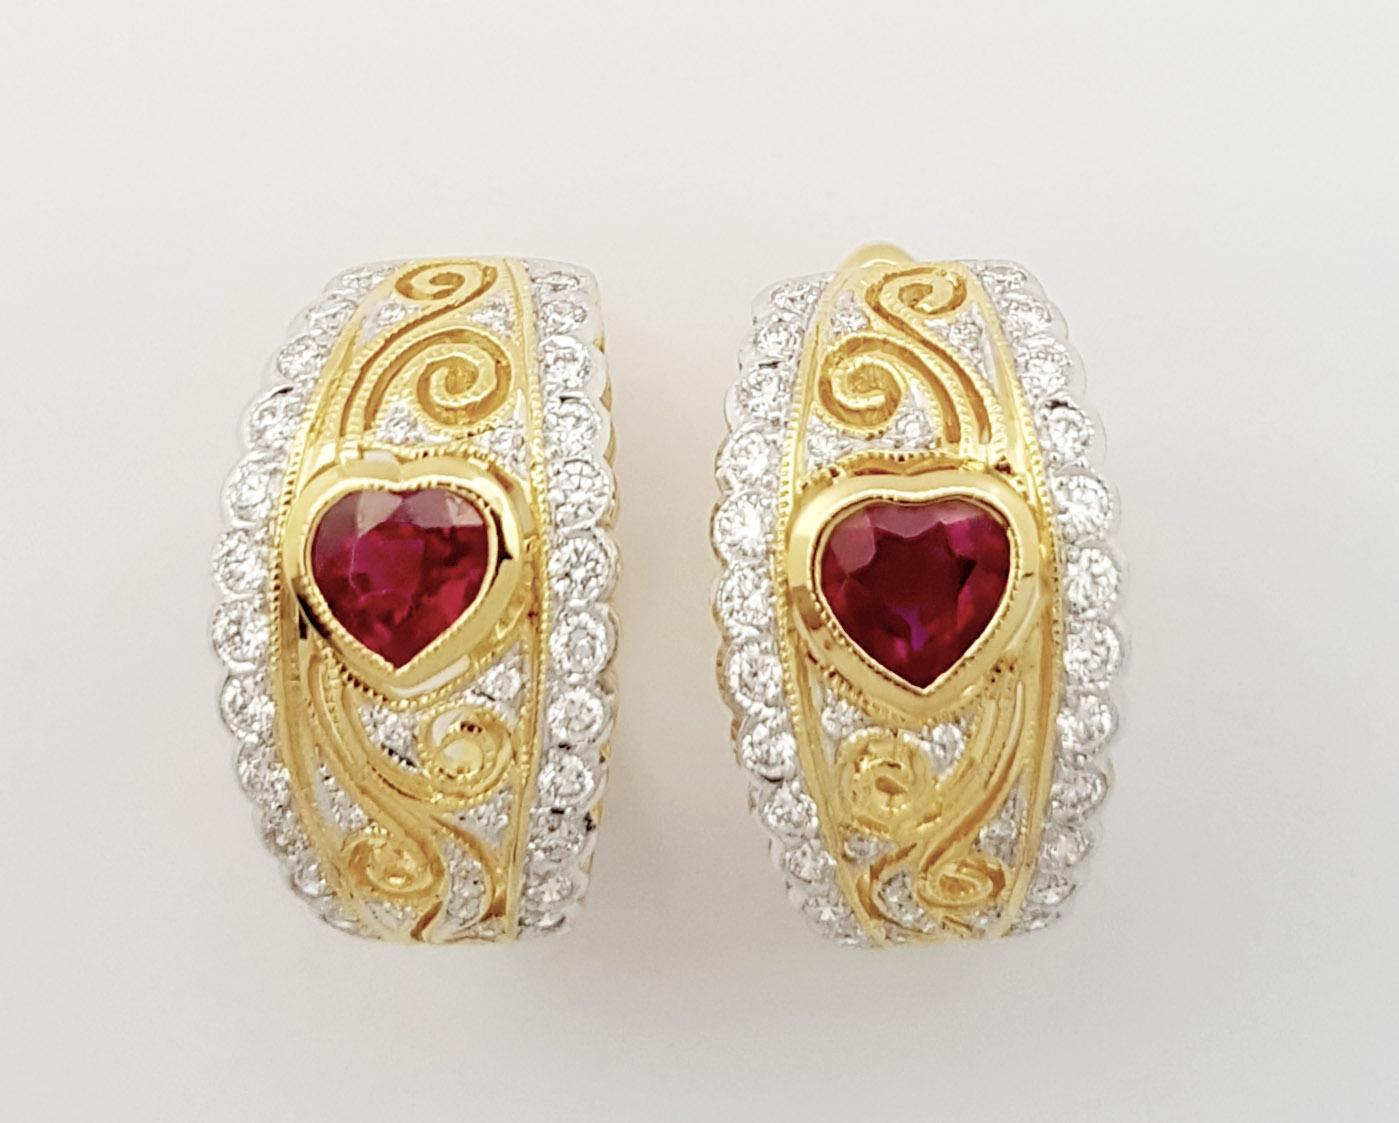 Ruby 0.95 carat with Diamond 0.62 carat Earrings set in 18K Gold Settings

Width: 1.0 cm 
Length: 1.8 cm
Total Weight: 18.09 grams

